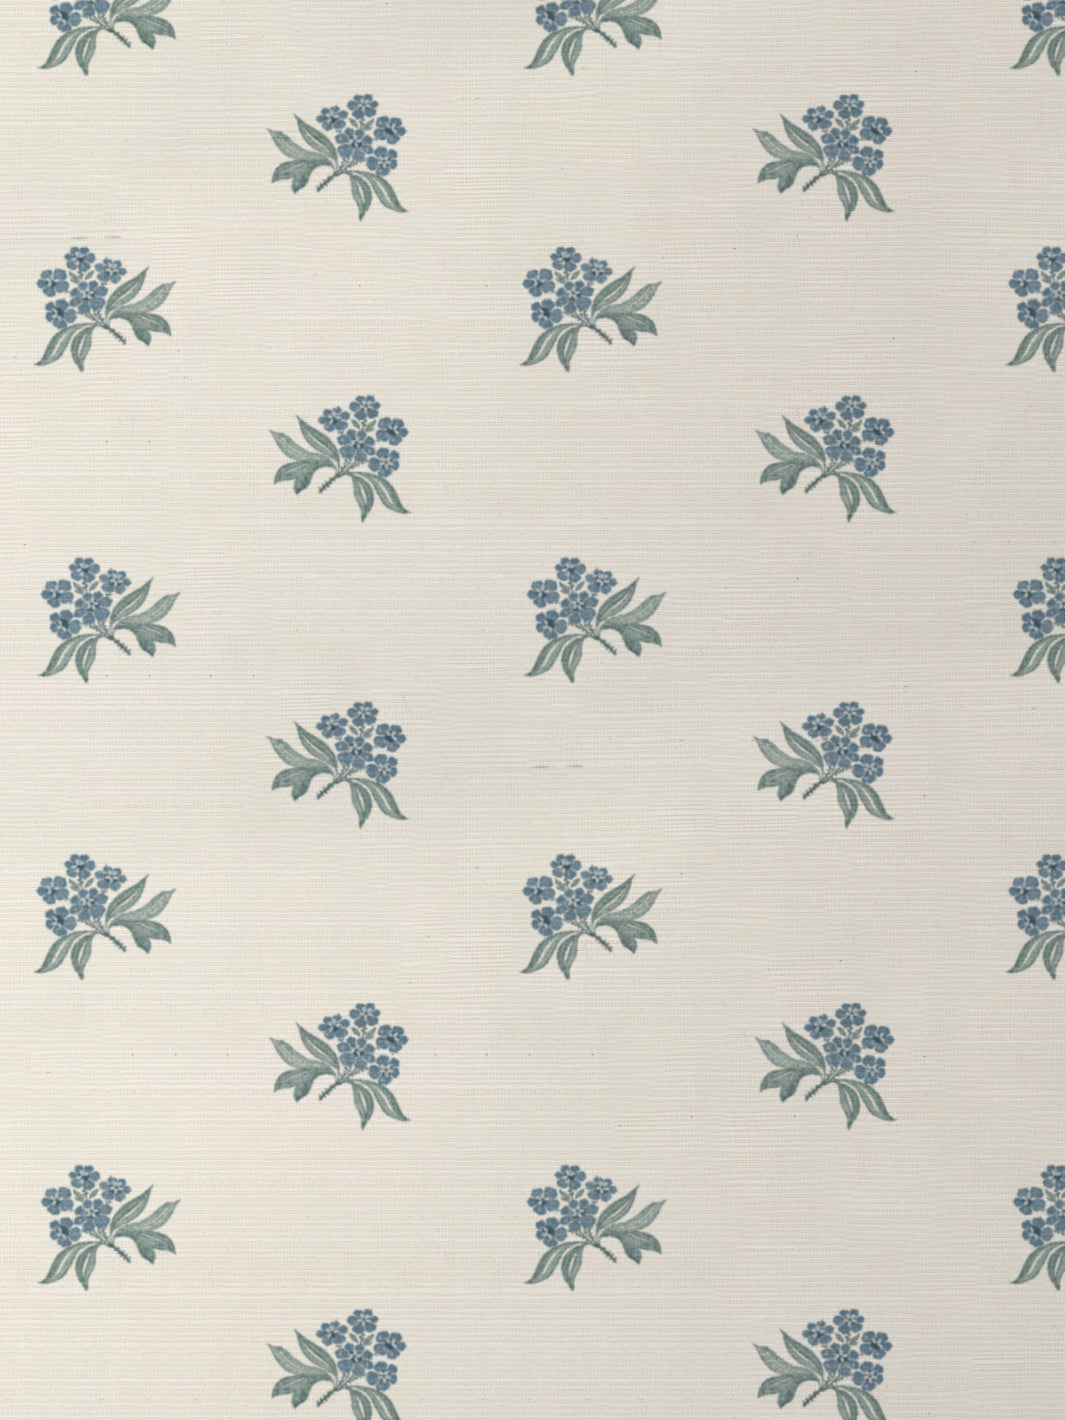 'Marian Ditsy' Grasscloth Wallpaper by Nathan Turner - Blue Aqua